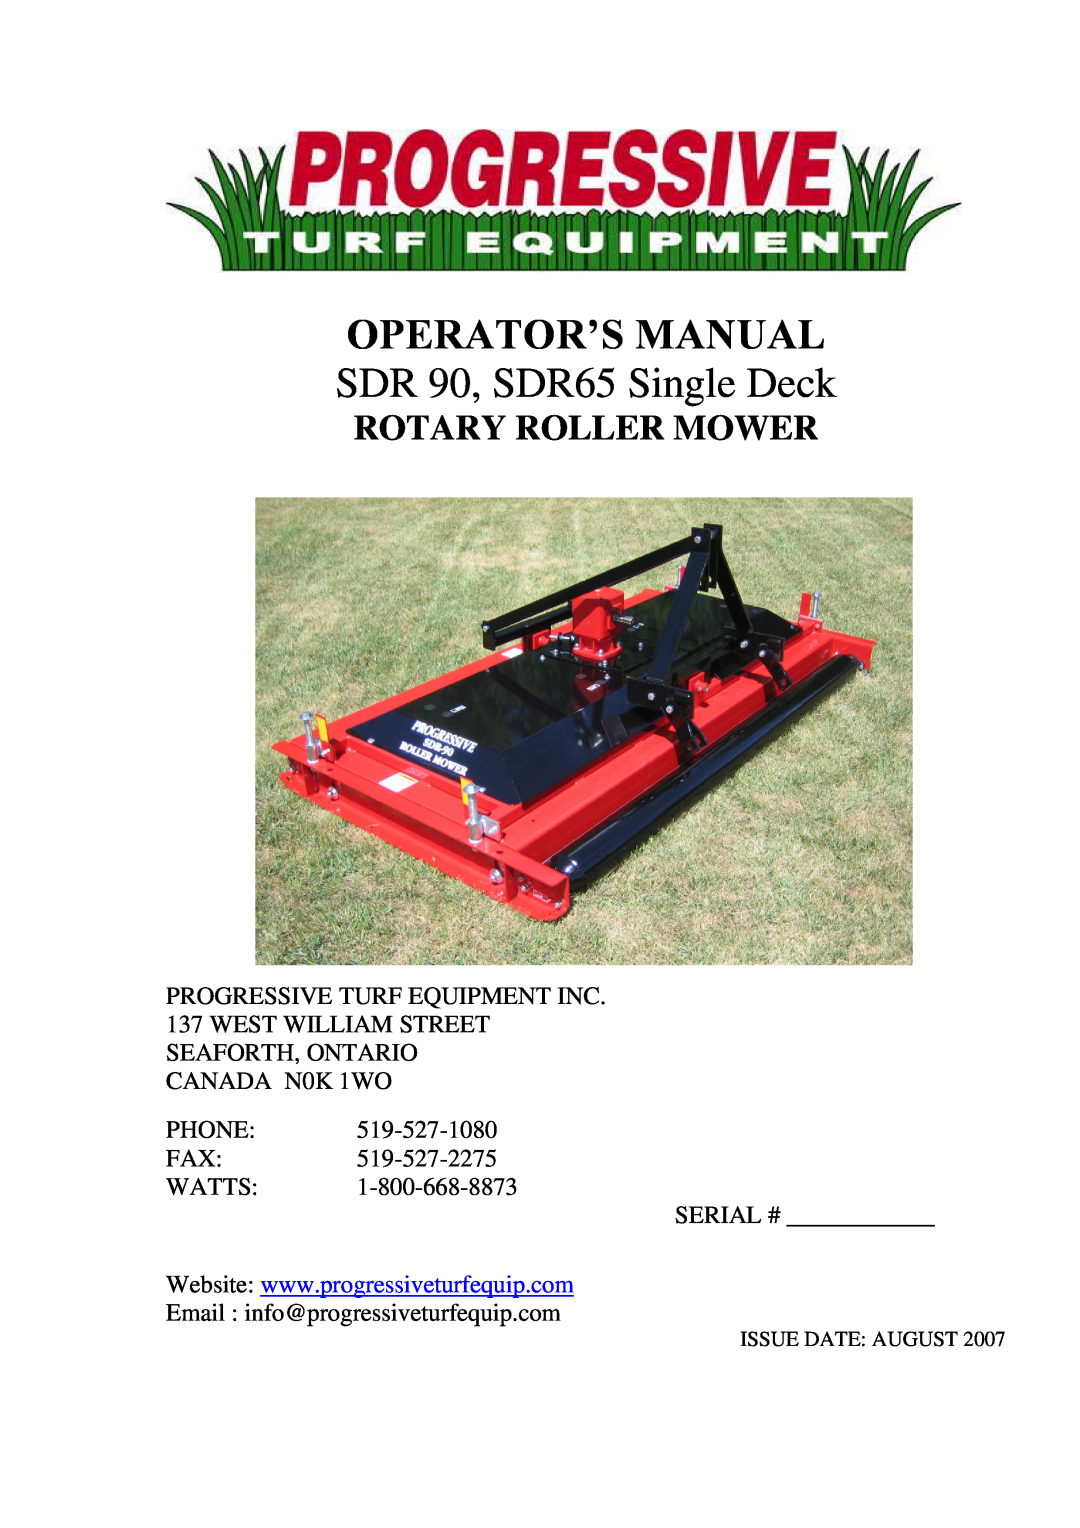 Progressive Turf Equipment manual Rotary Roller Mower, Operator’Smanual, SDR 90, SDR65 Single Deck 